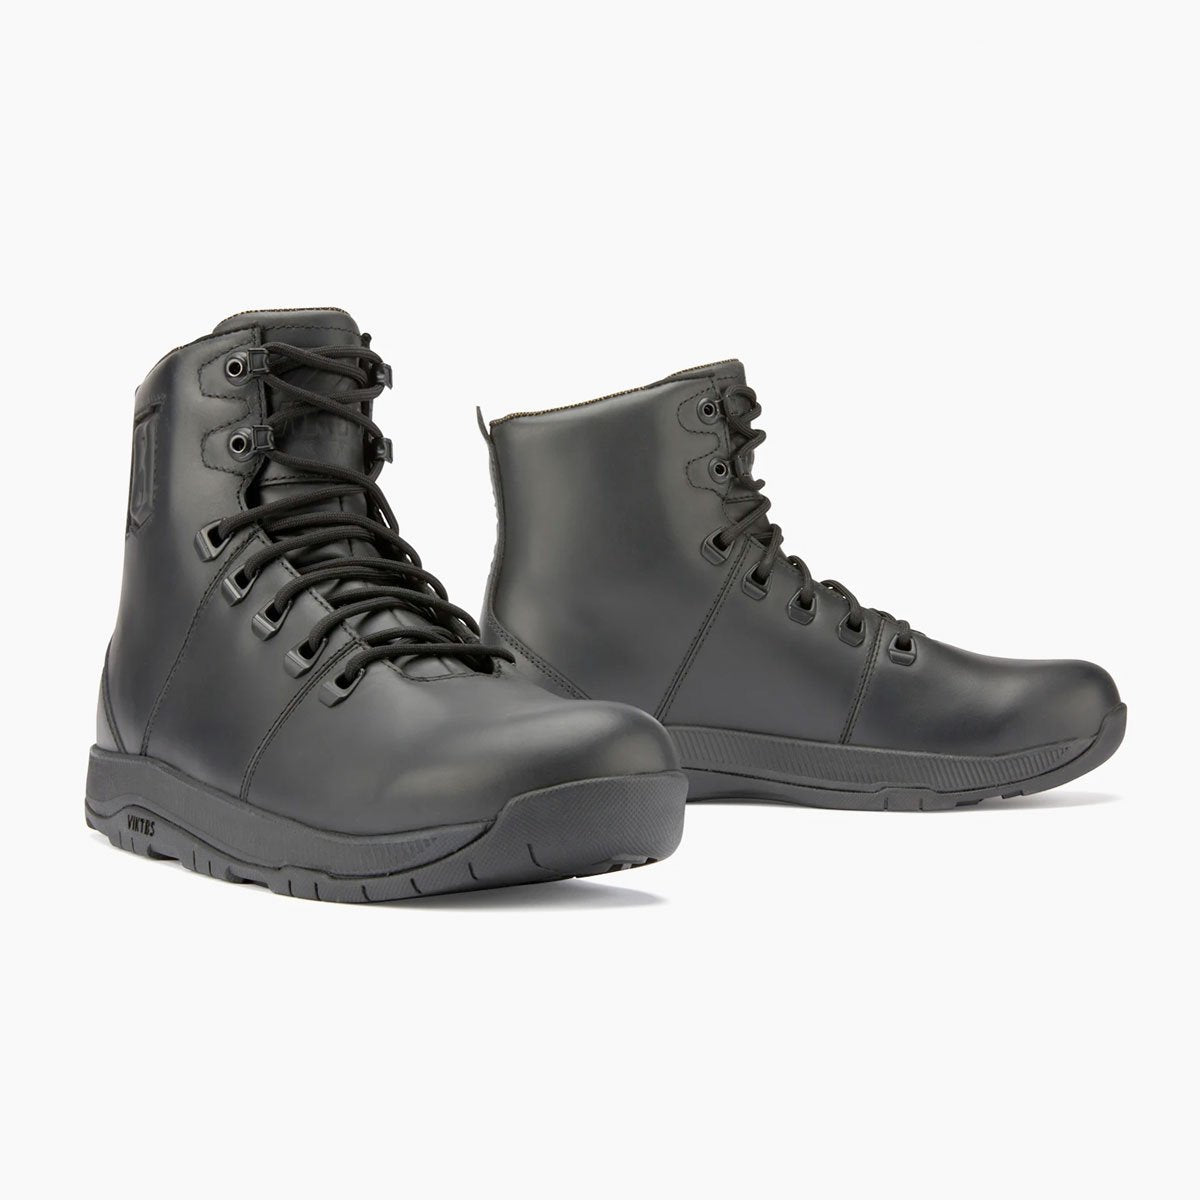 VIKTOS Actual Waterproof Boot Black Footwear VIKTOS 6 Tactical Gear Supplier Tactical Distributors Australia